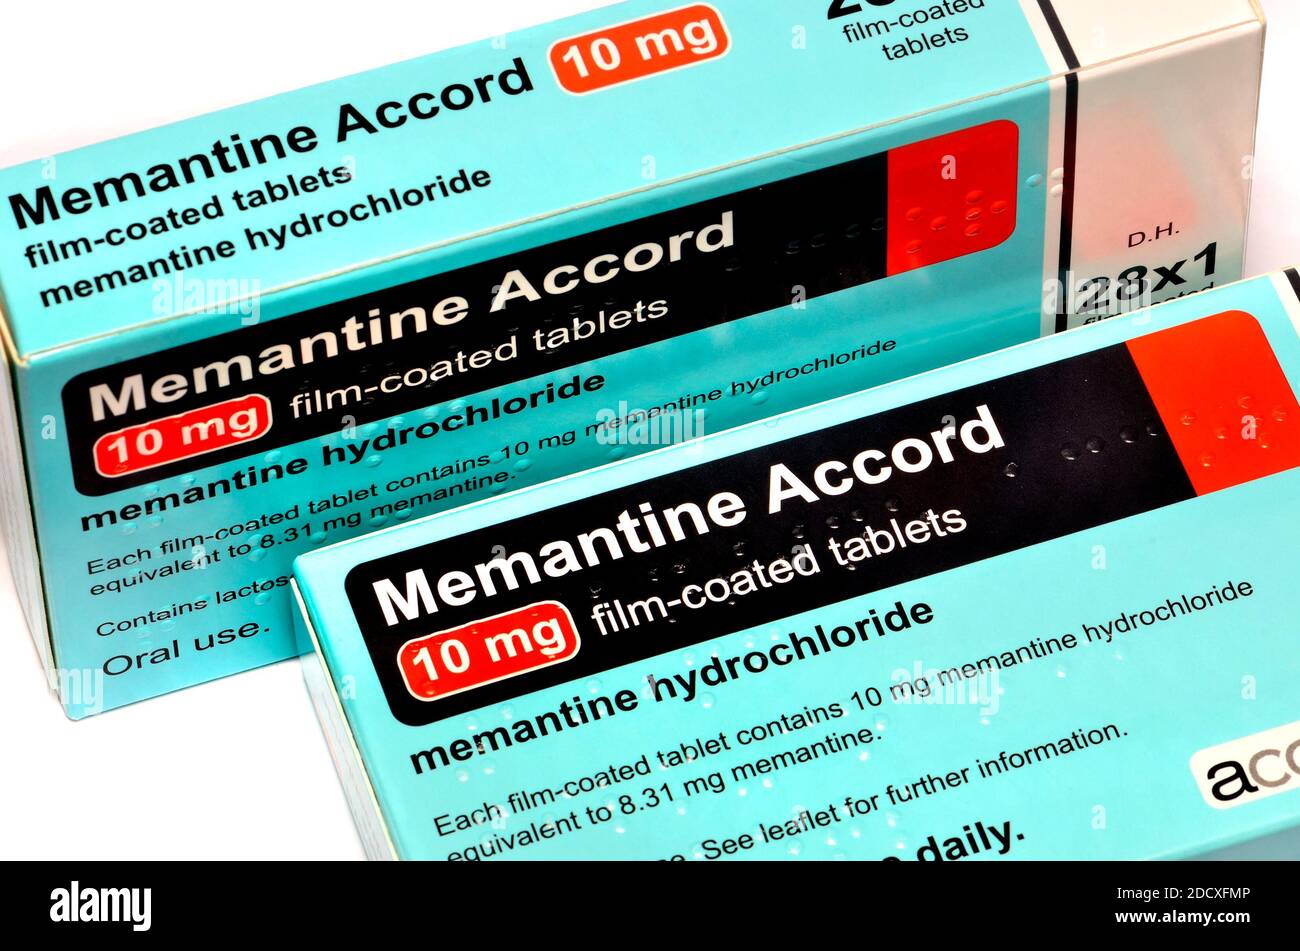 Memantine Accord - treatment for Alzheimer's disease Stock Photo